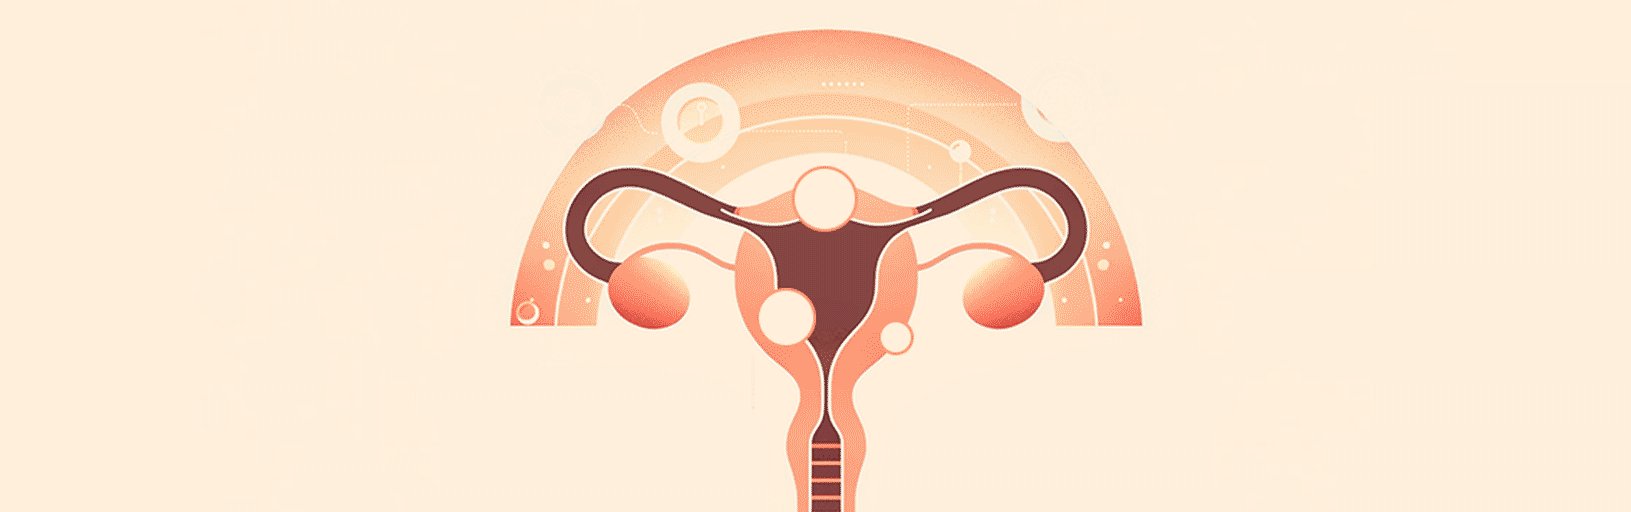 London Pregnancy Clinic Fibroids Awareness Month